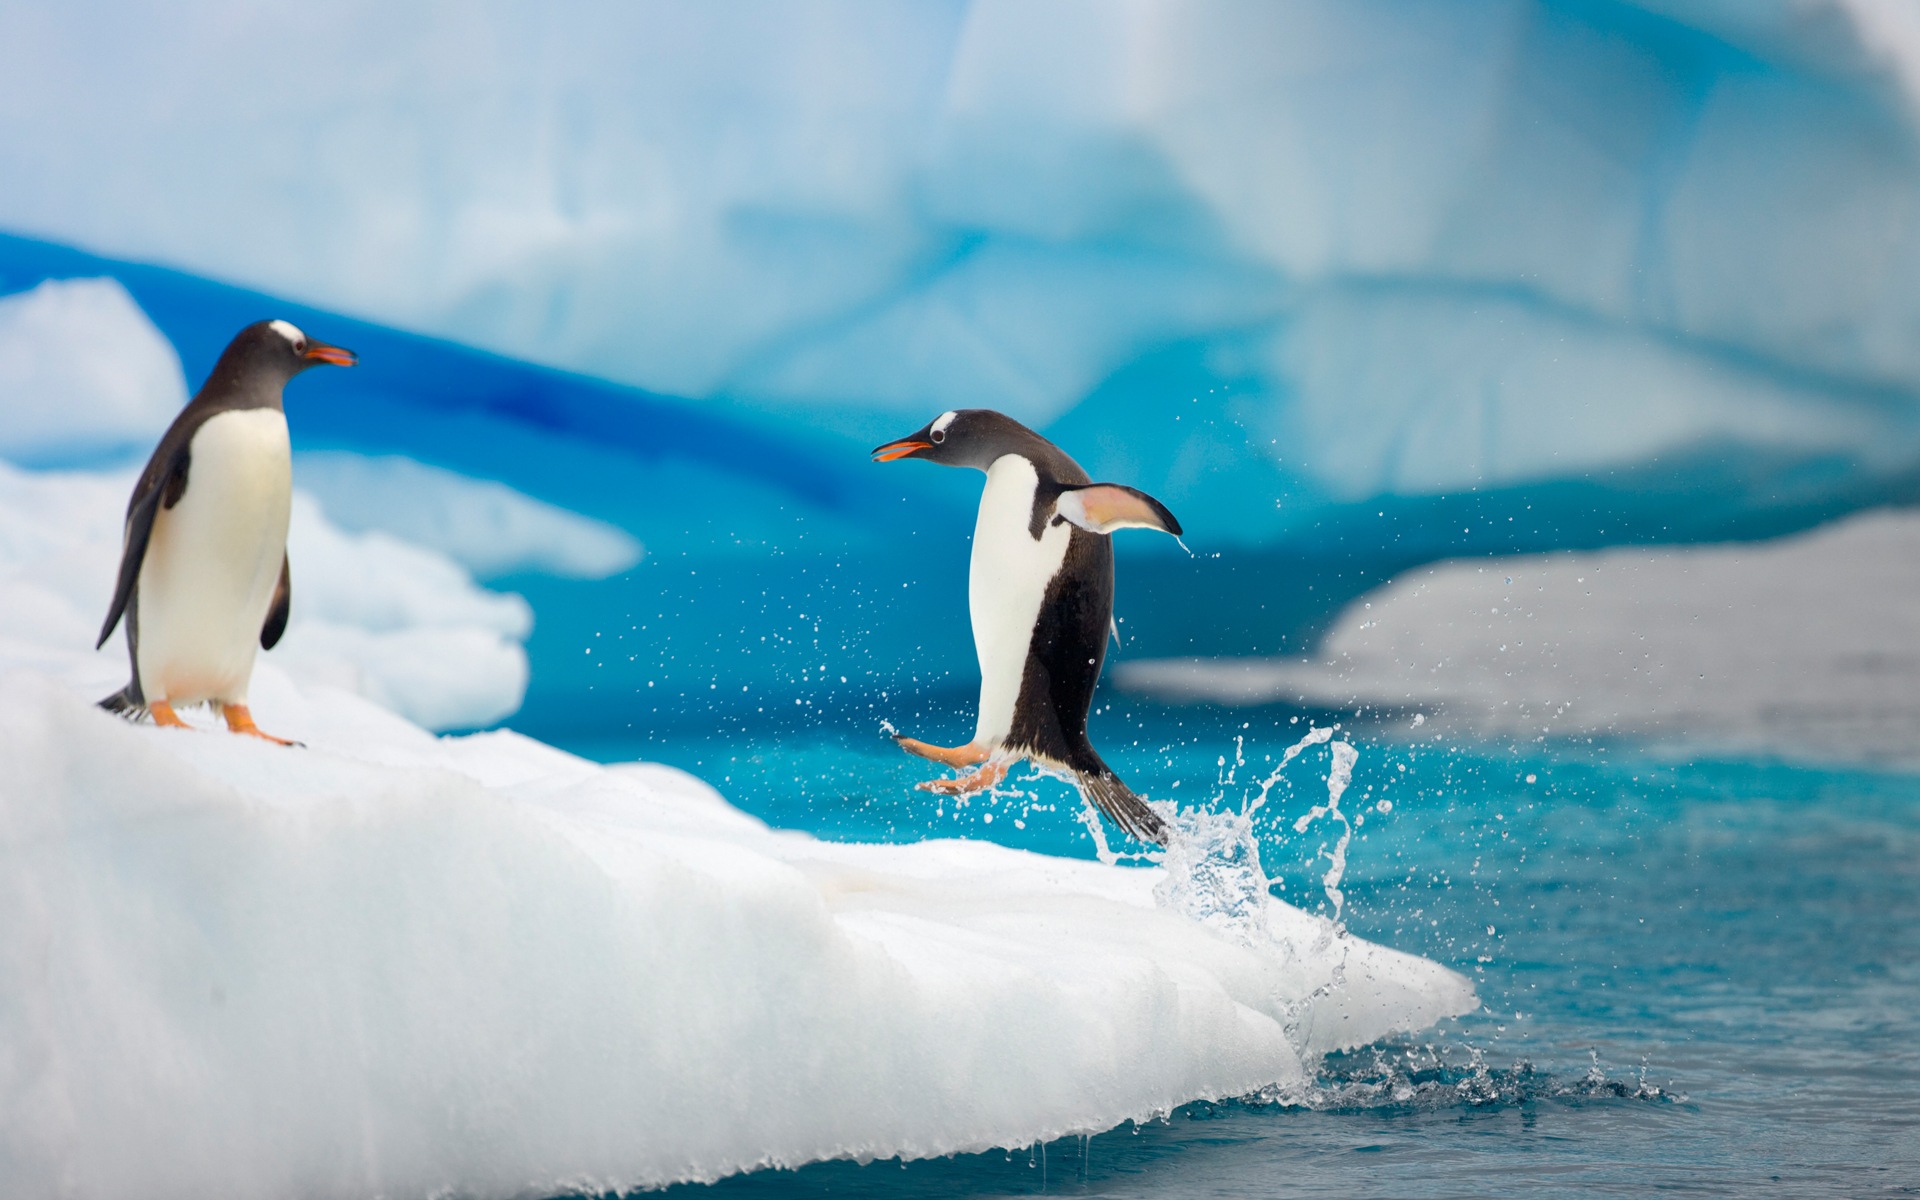 Windows 8 Wallpapers: Antarctic, Snow scenery, Antarctic penguins #12 - 1920x1200